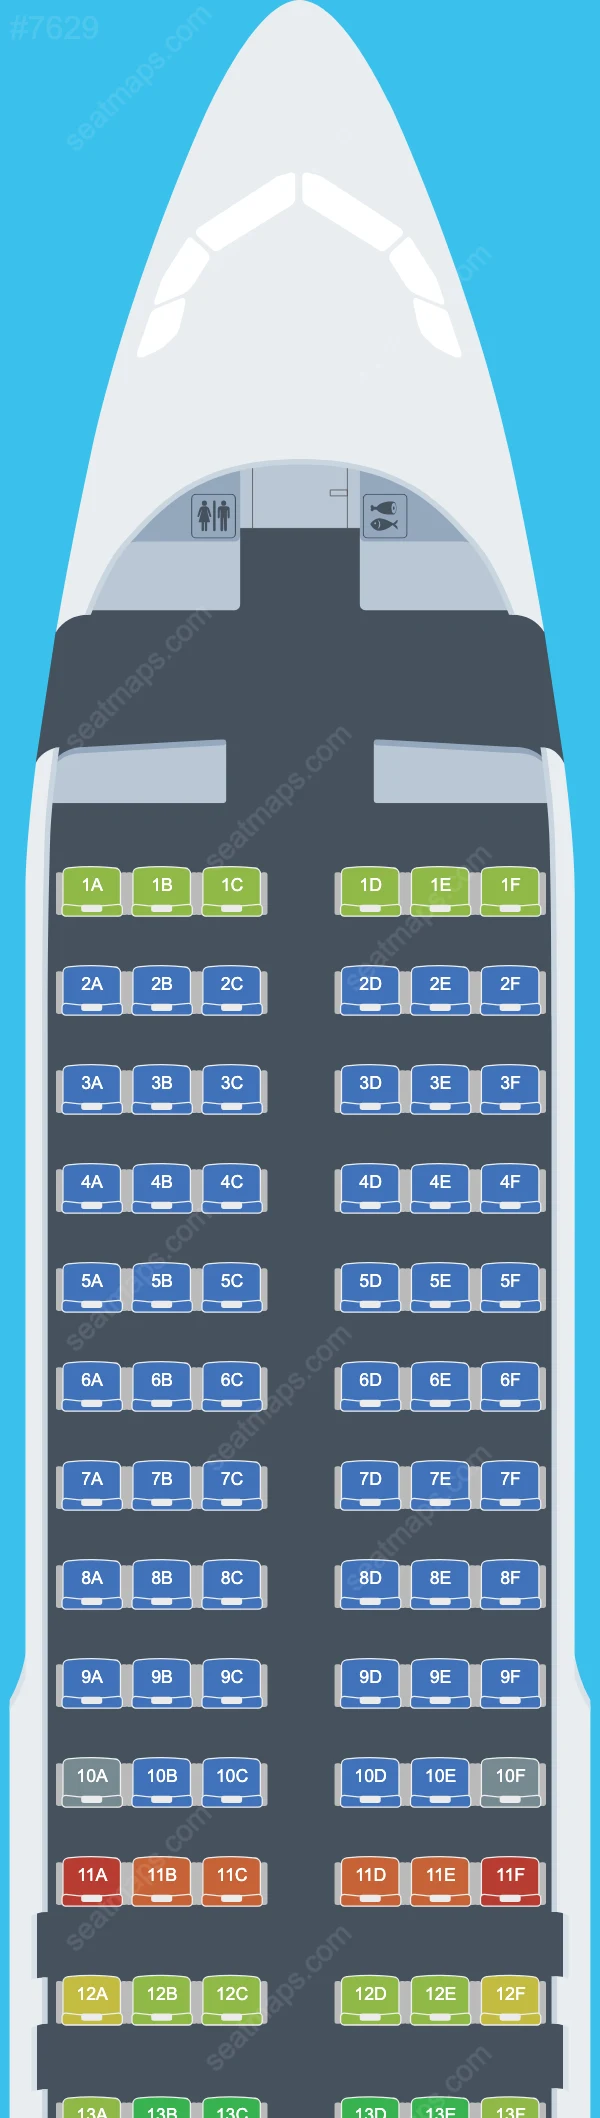 FlyOne Airbus A320 Seat Maps A320-200